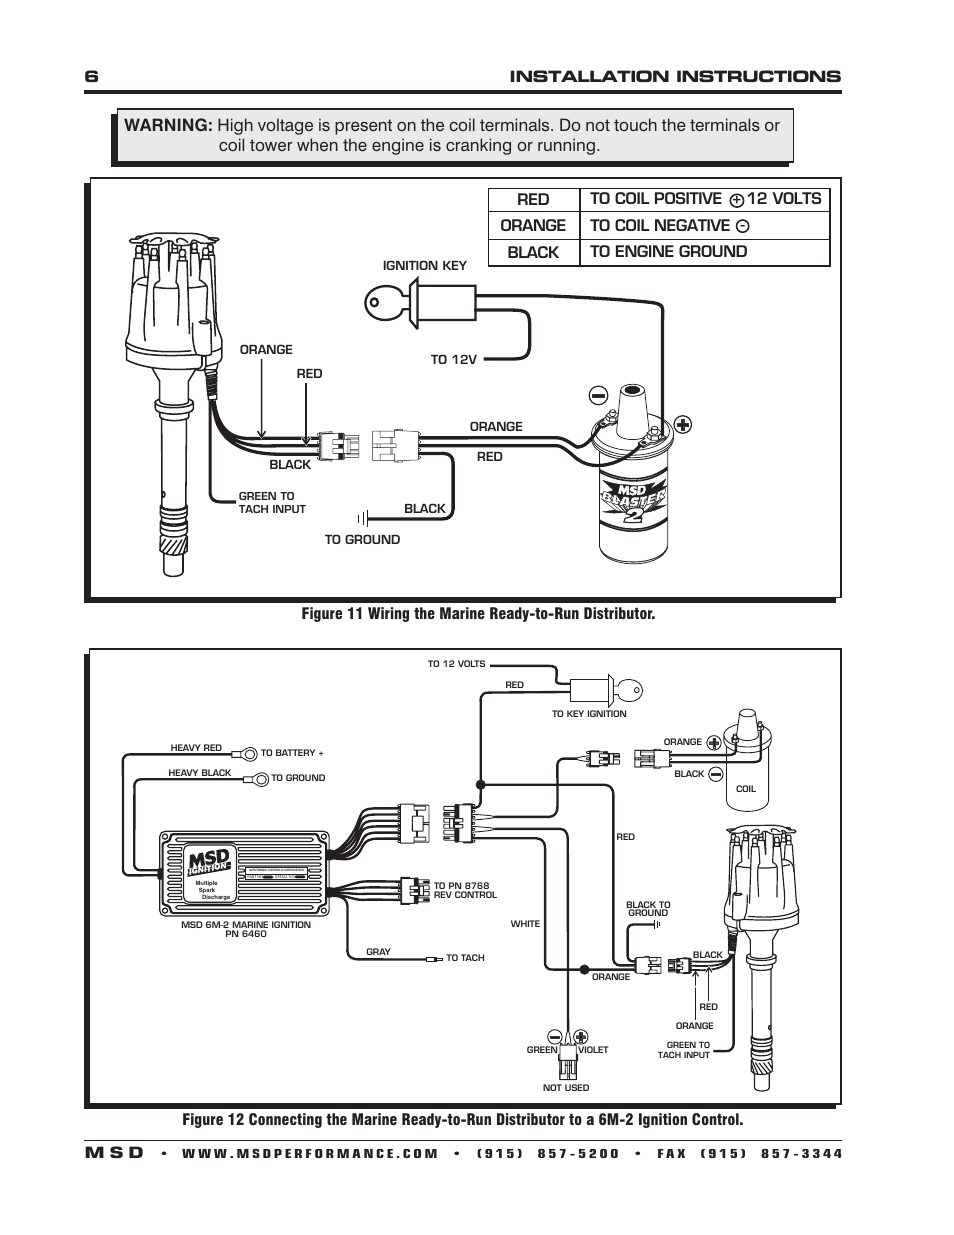 Ford Distributor Wiring Diagram from www.manualsdir.com